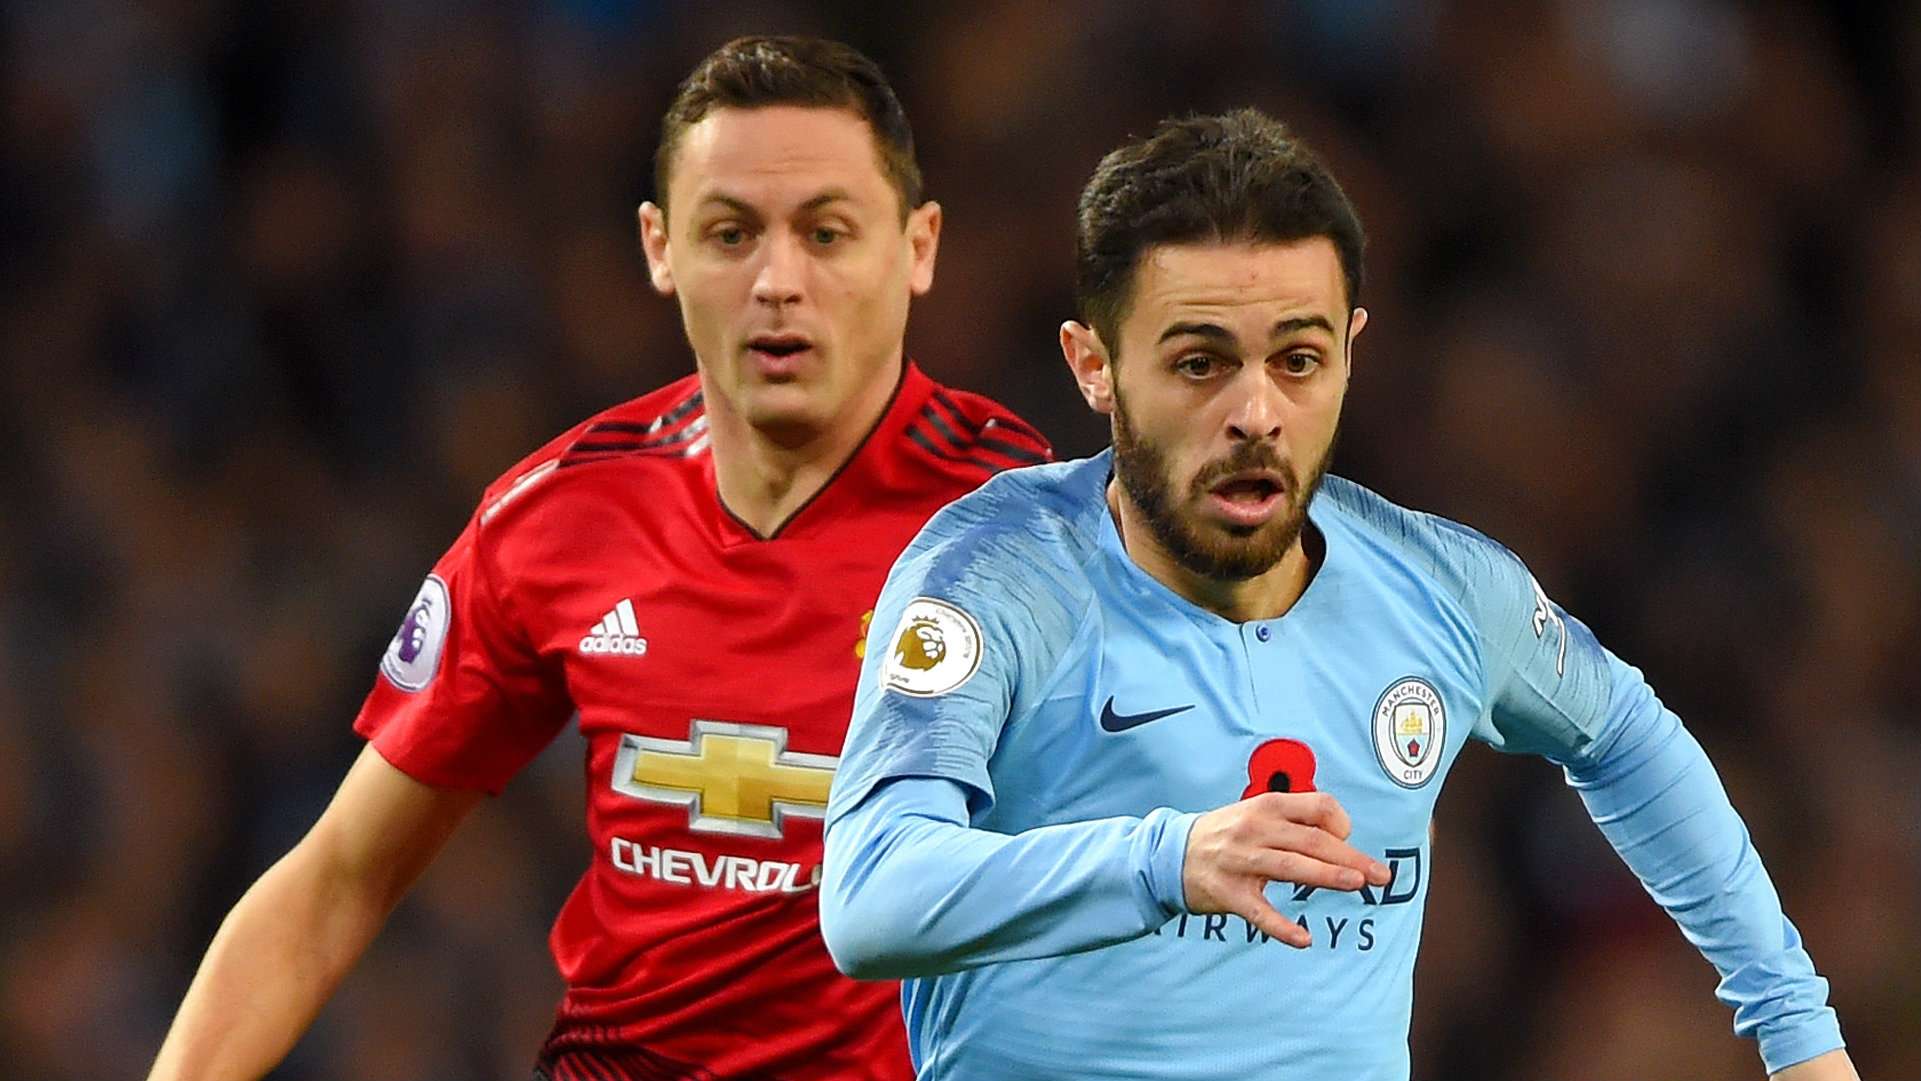 Bernardo Silva Nemanja Matic Manchester City vs Manchester United 2018-19